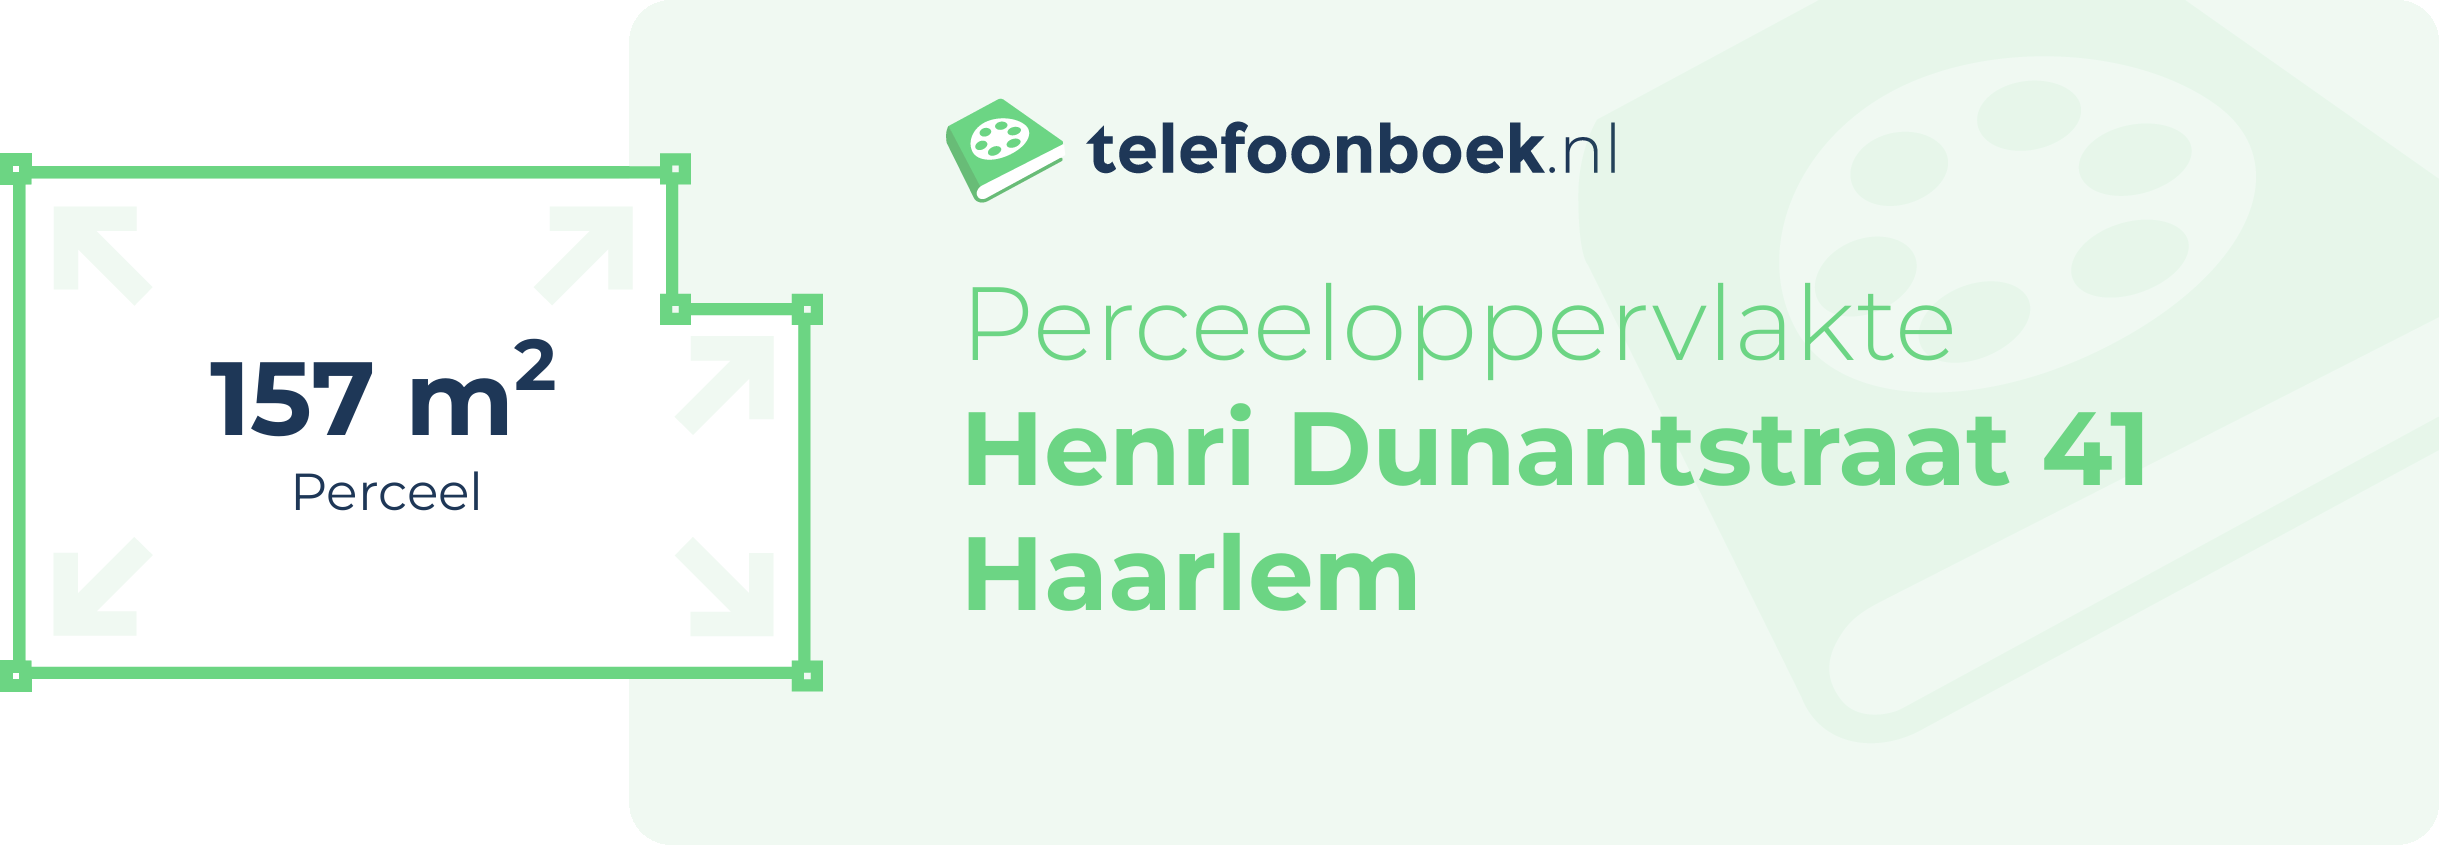 Perceeloppervlakte Henri Dunantstraat 41 Haarlem